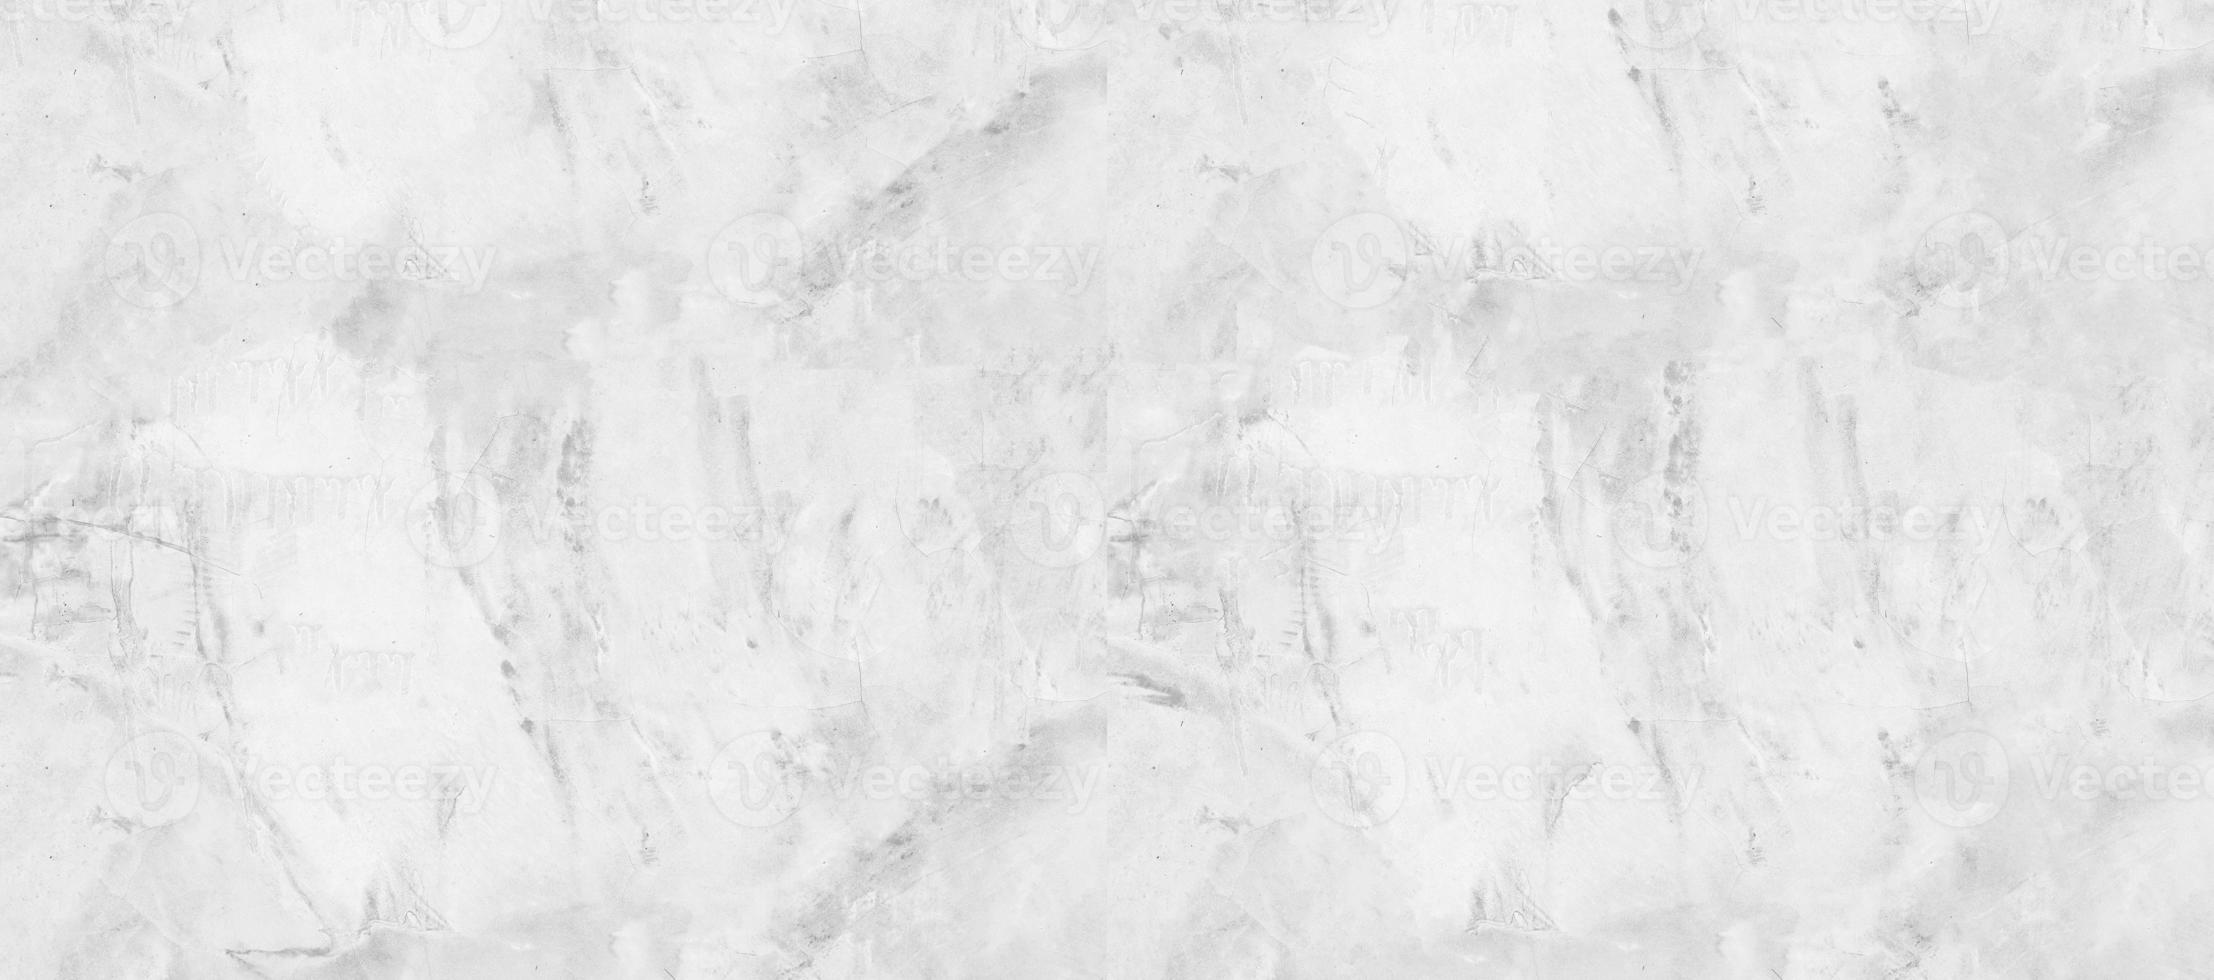 textura de parede de concreto branco para o fundo foto